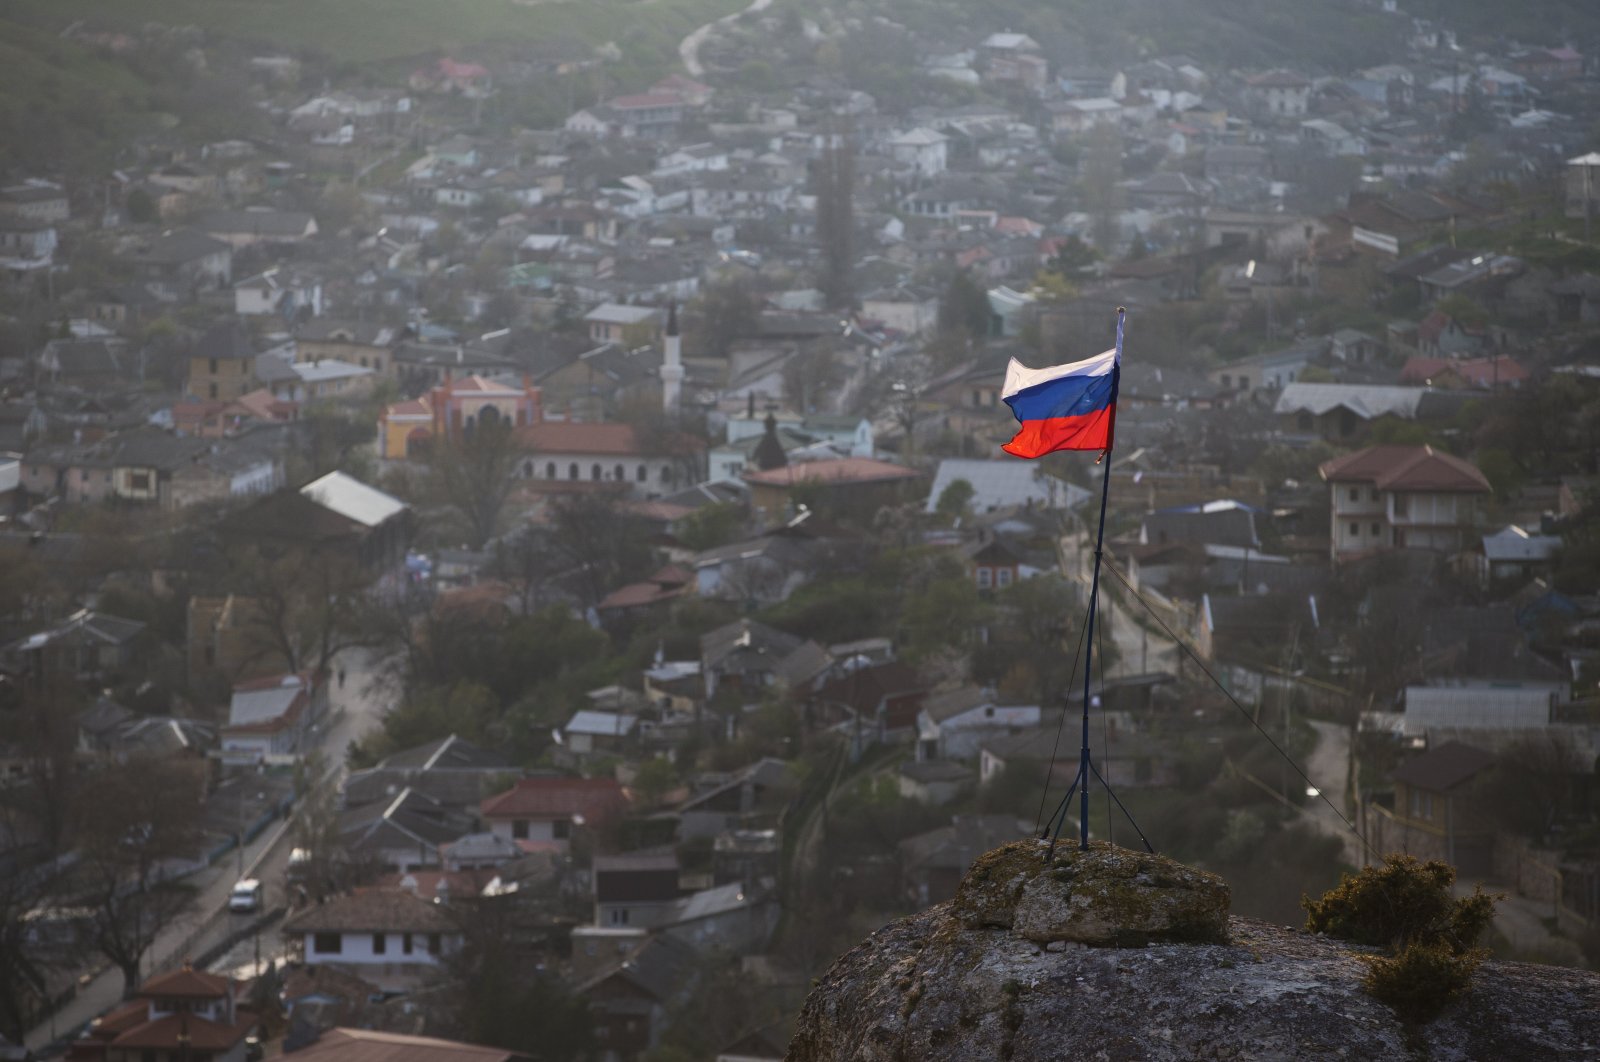 A Russian national flag flies on a hilltop near the city of Bakhchysarai, Crimea, Ukraine, March 28, 2014. (AP Photo)